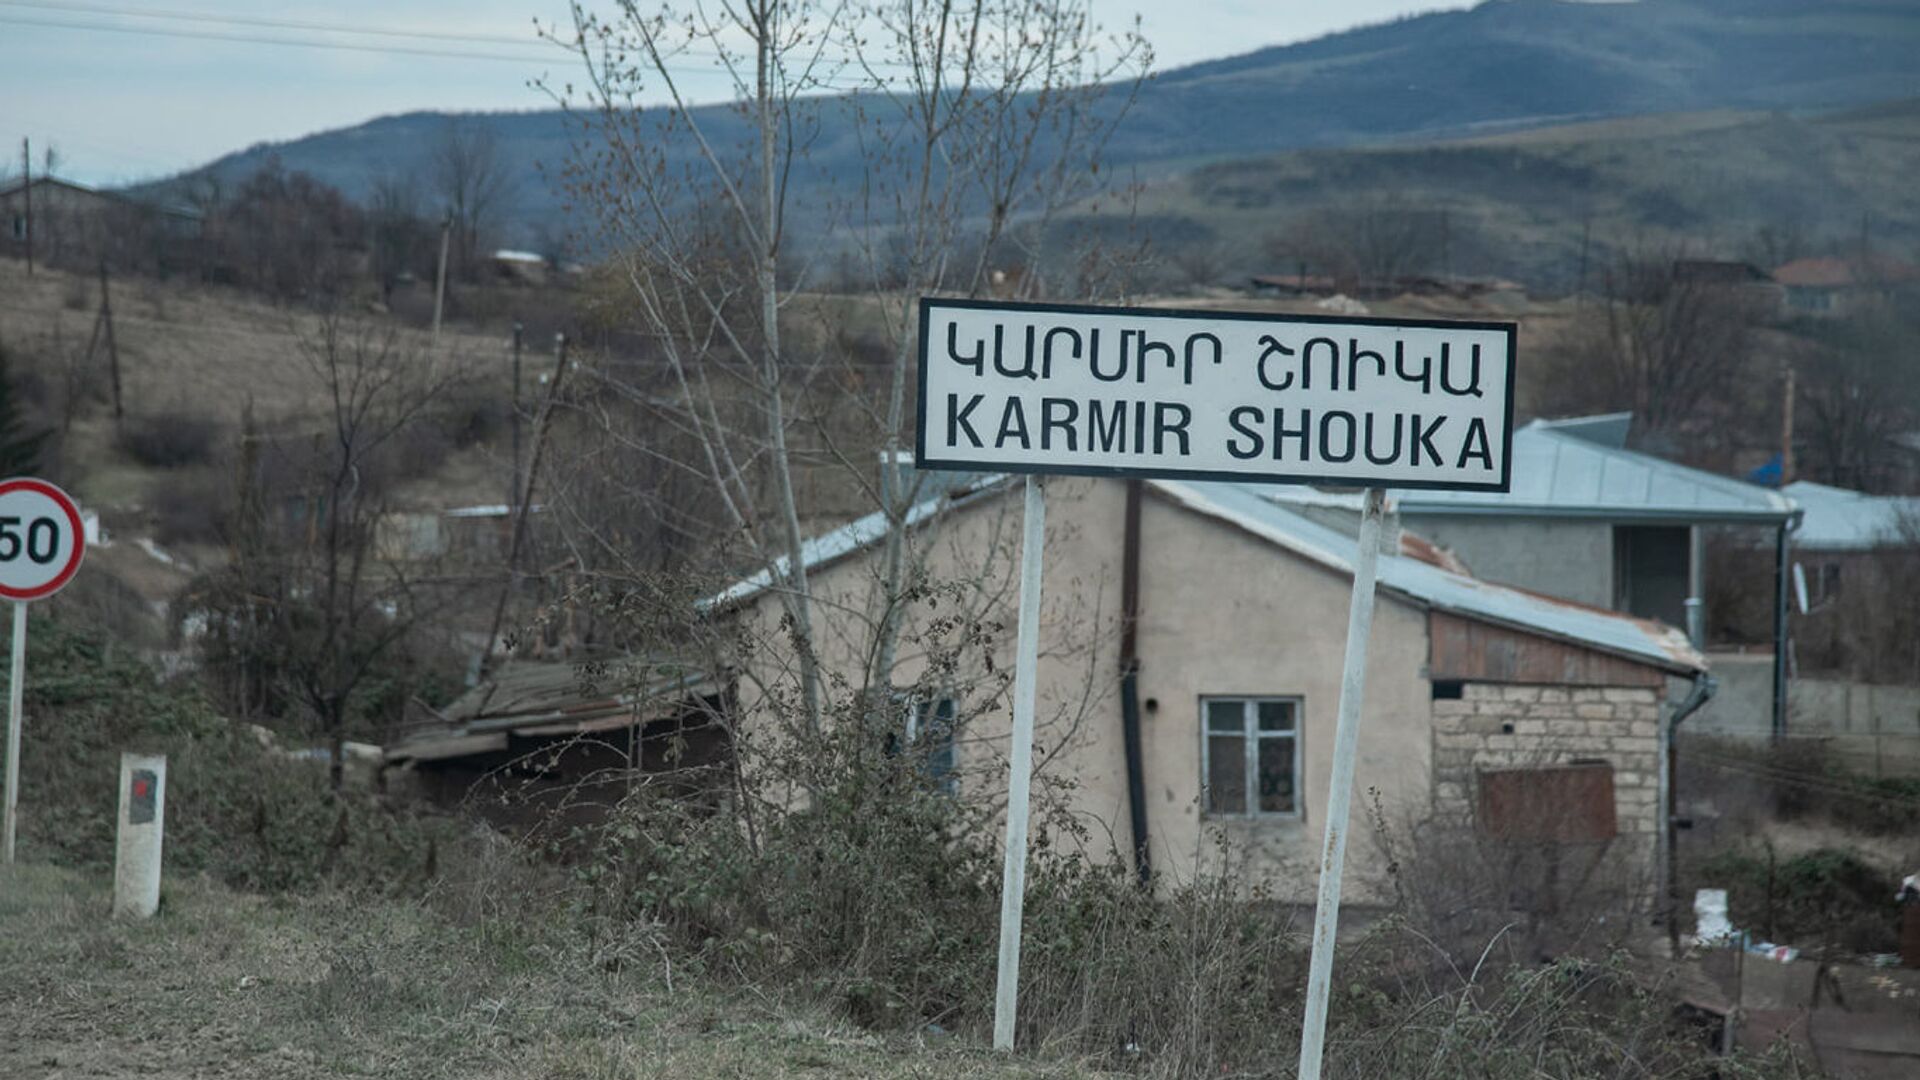 Село Кармир Шука в Карабахе - Sputnik Армения, 1920, 04.12.2021